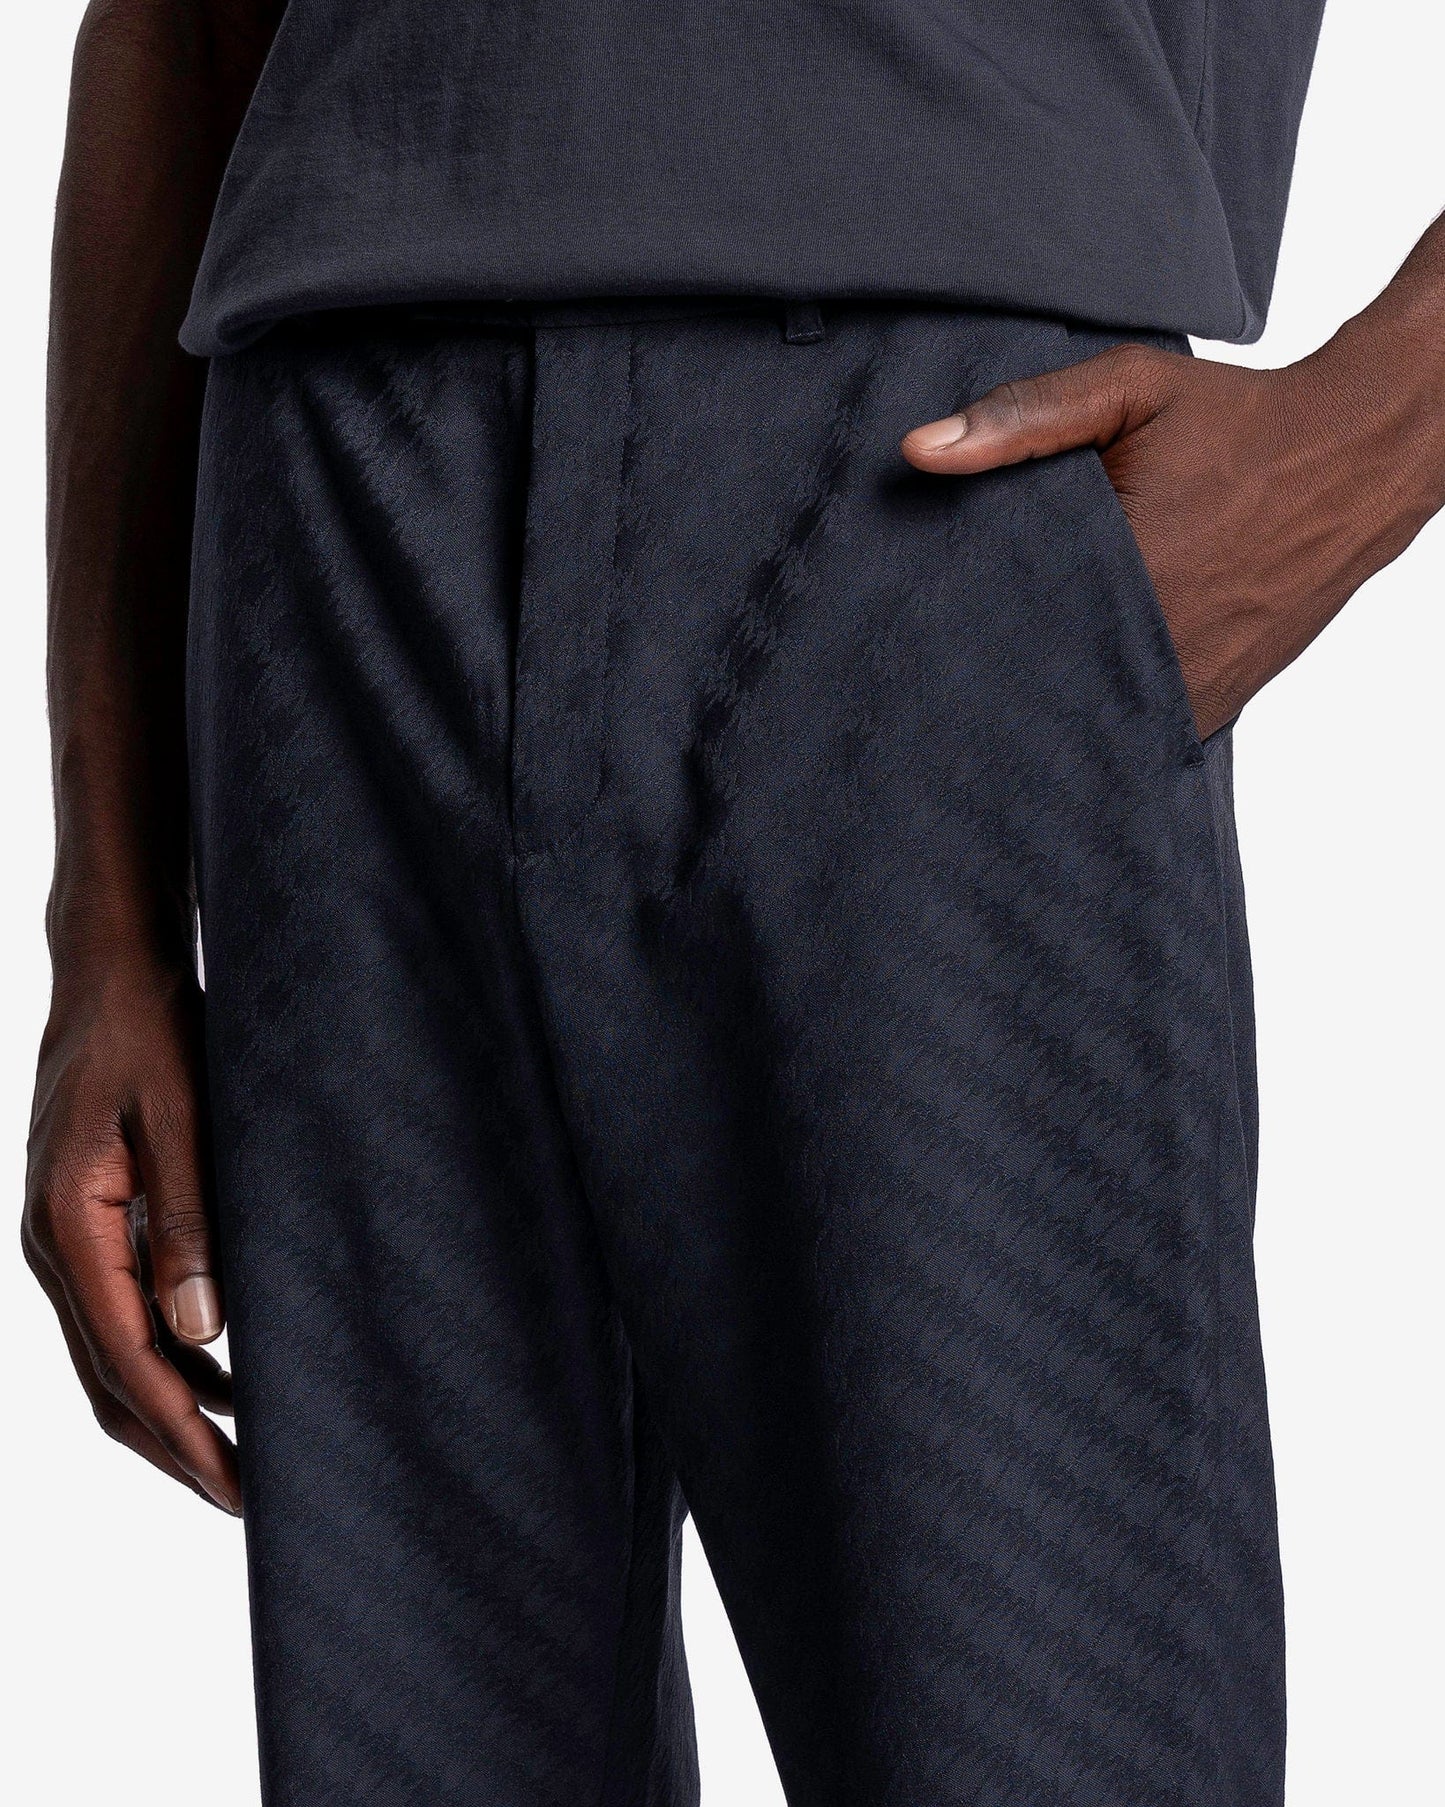 Nike Men's Pants Nike x Martine Rose Mii Trousers in Pitch Blue